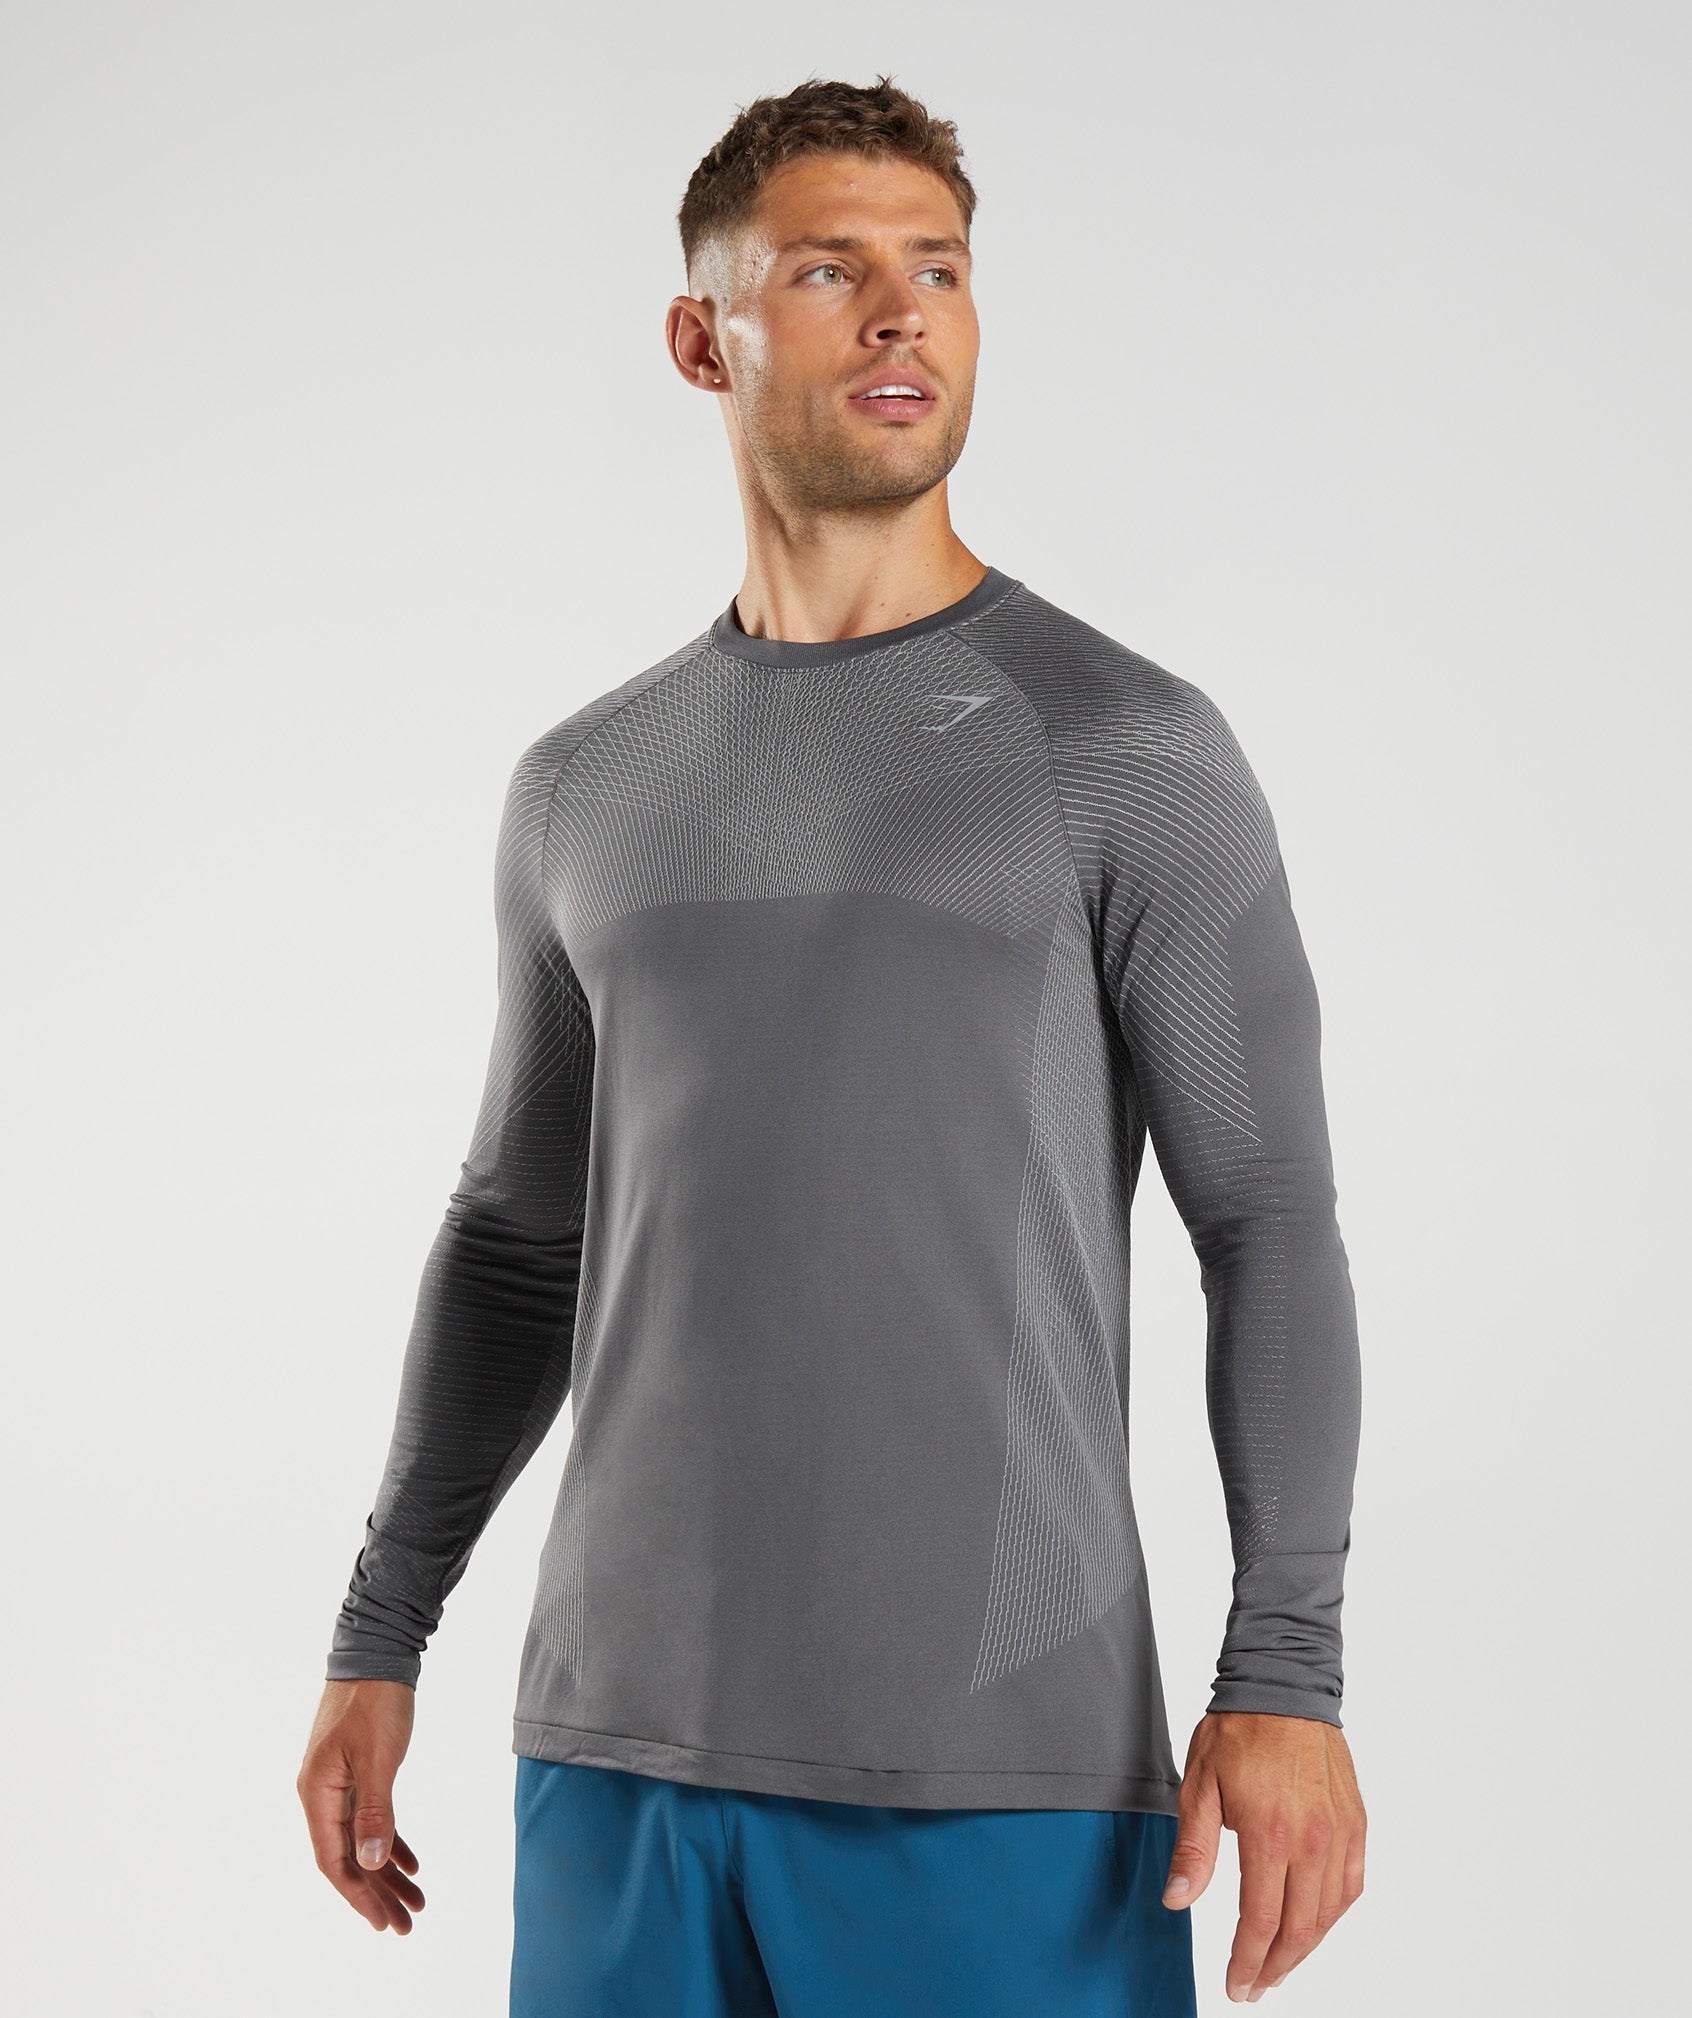 Apex Seamless Long Sleeve T-Shirt in Silhouette Grey/Smokey Grey - view 1